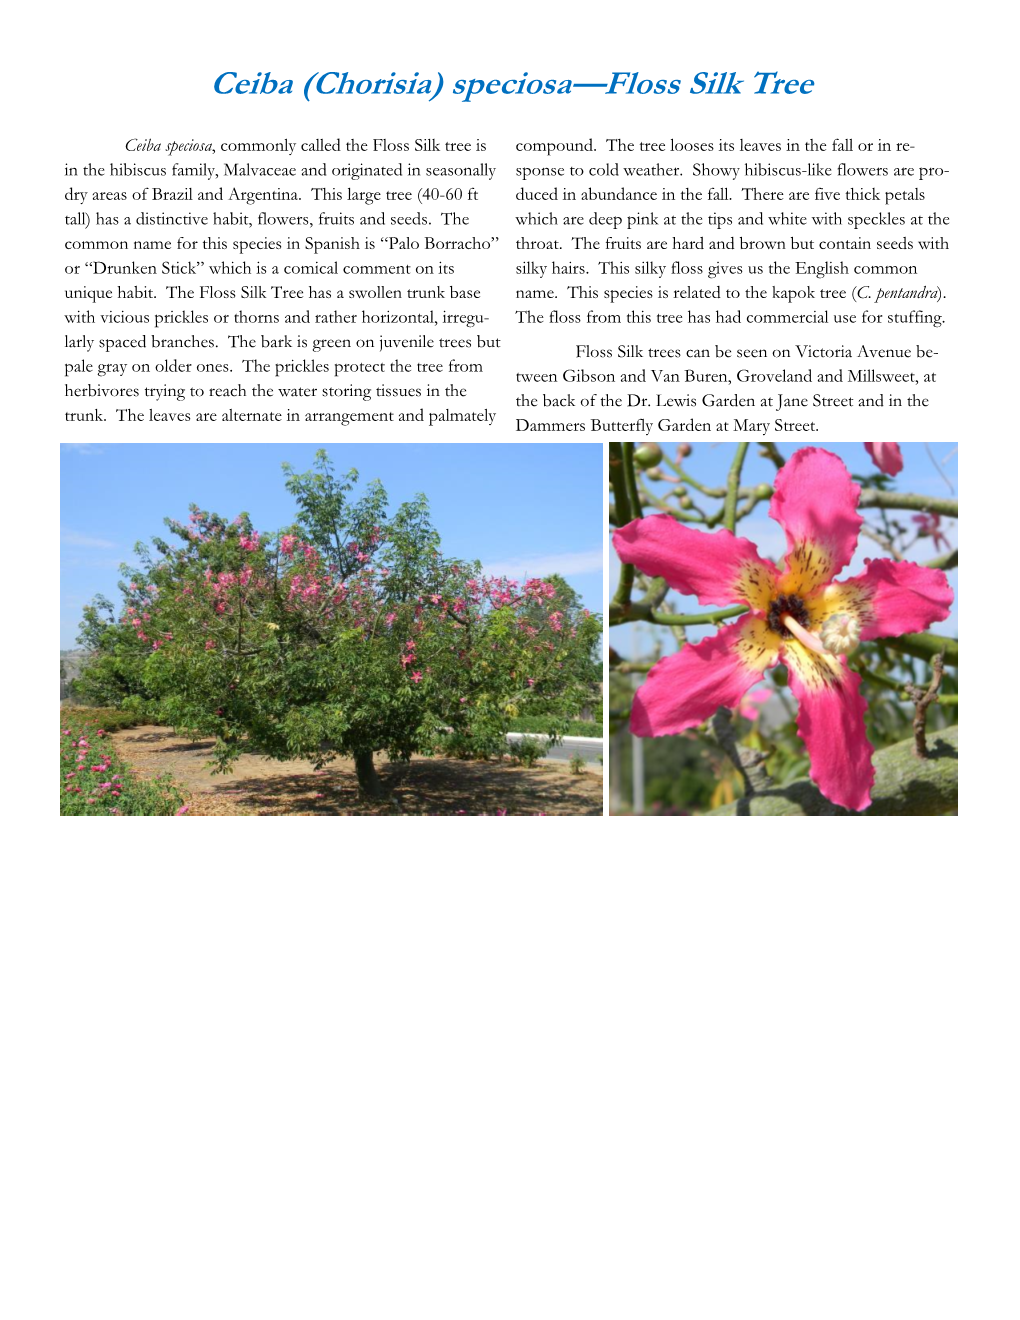 Ceiba Speciosa – Floss Silk Tree